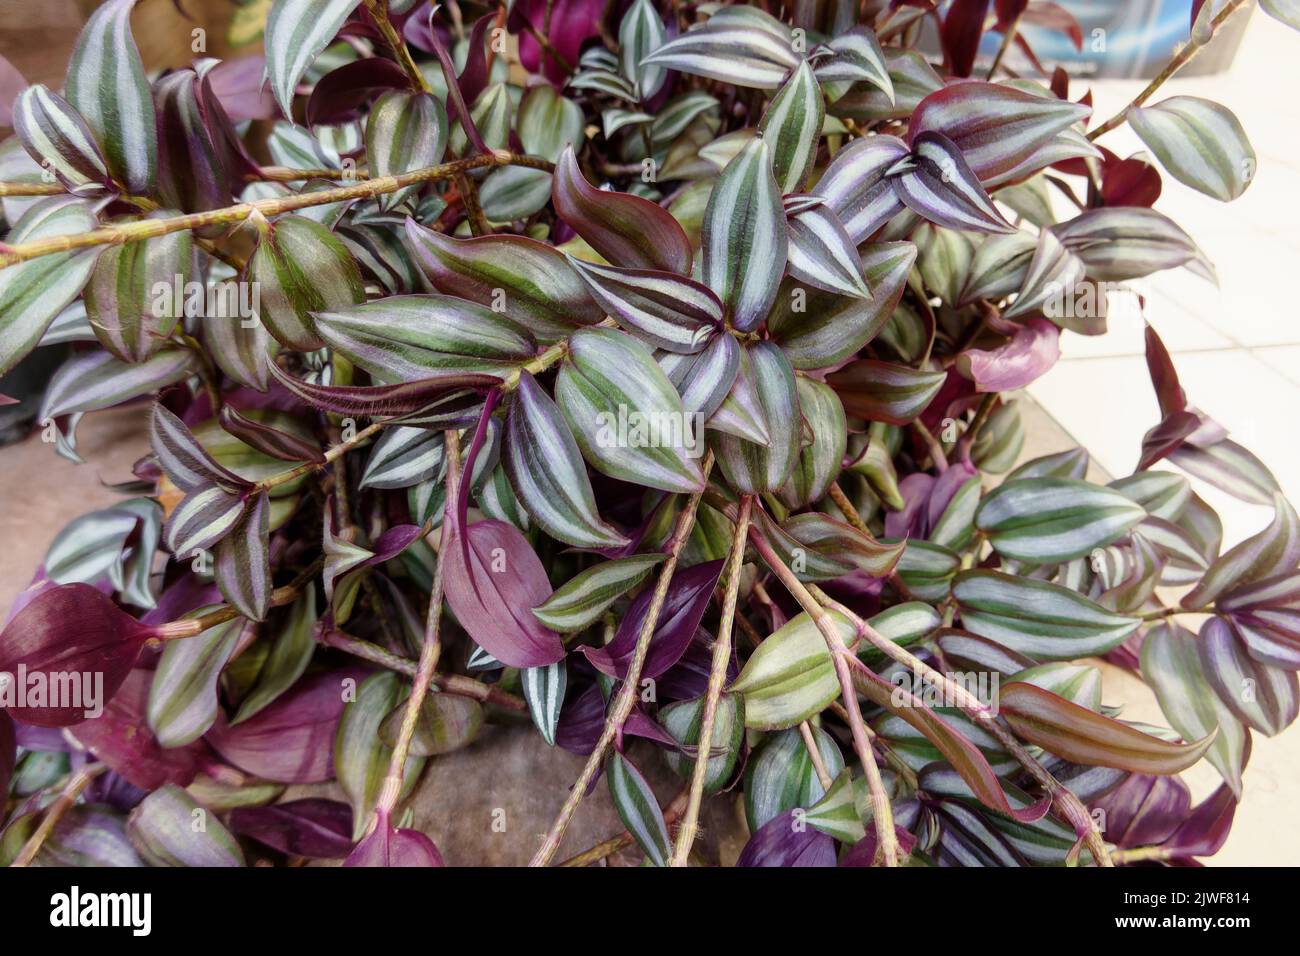 Wandering Jew, Wandering Dude, Inch Plant, Spiderwort or Tradescantia Zebrina plant flowers. Pink purple violet leafs Stock Photo